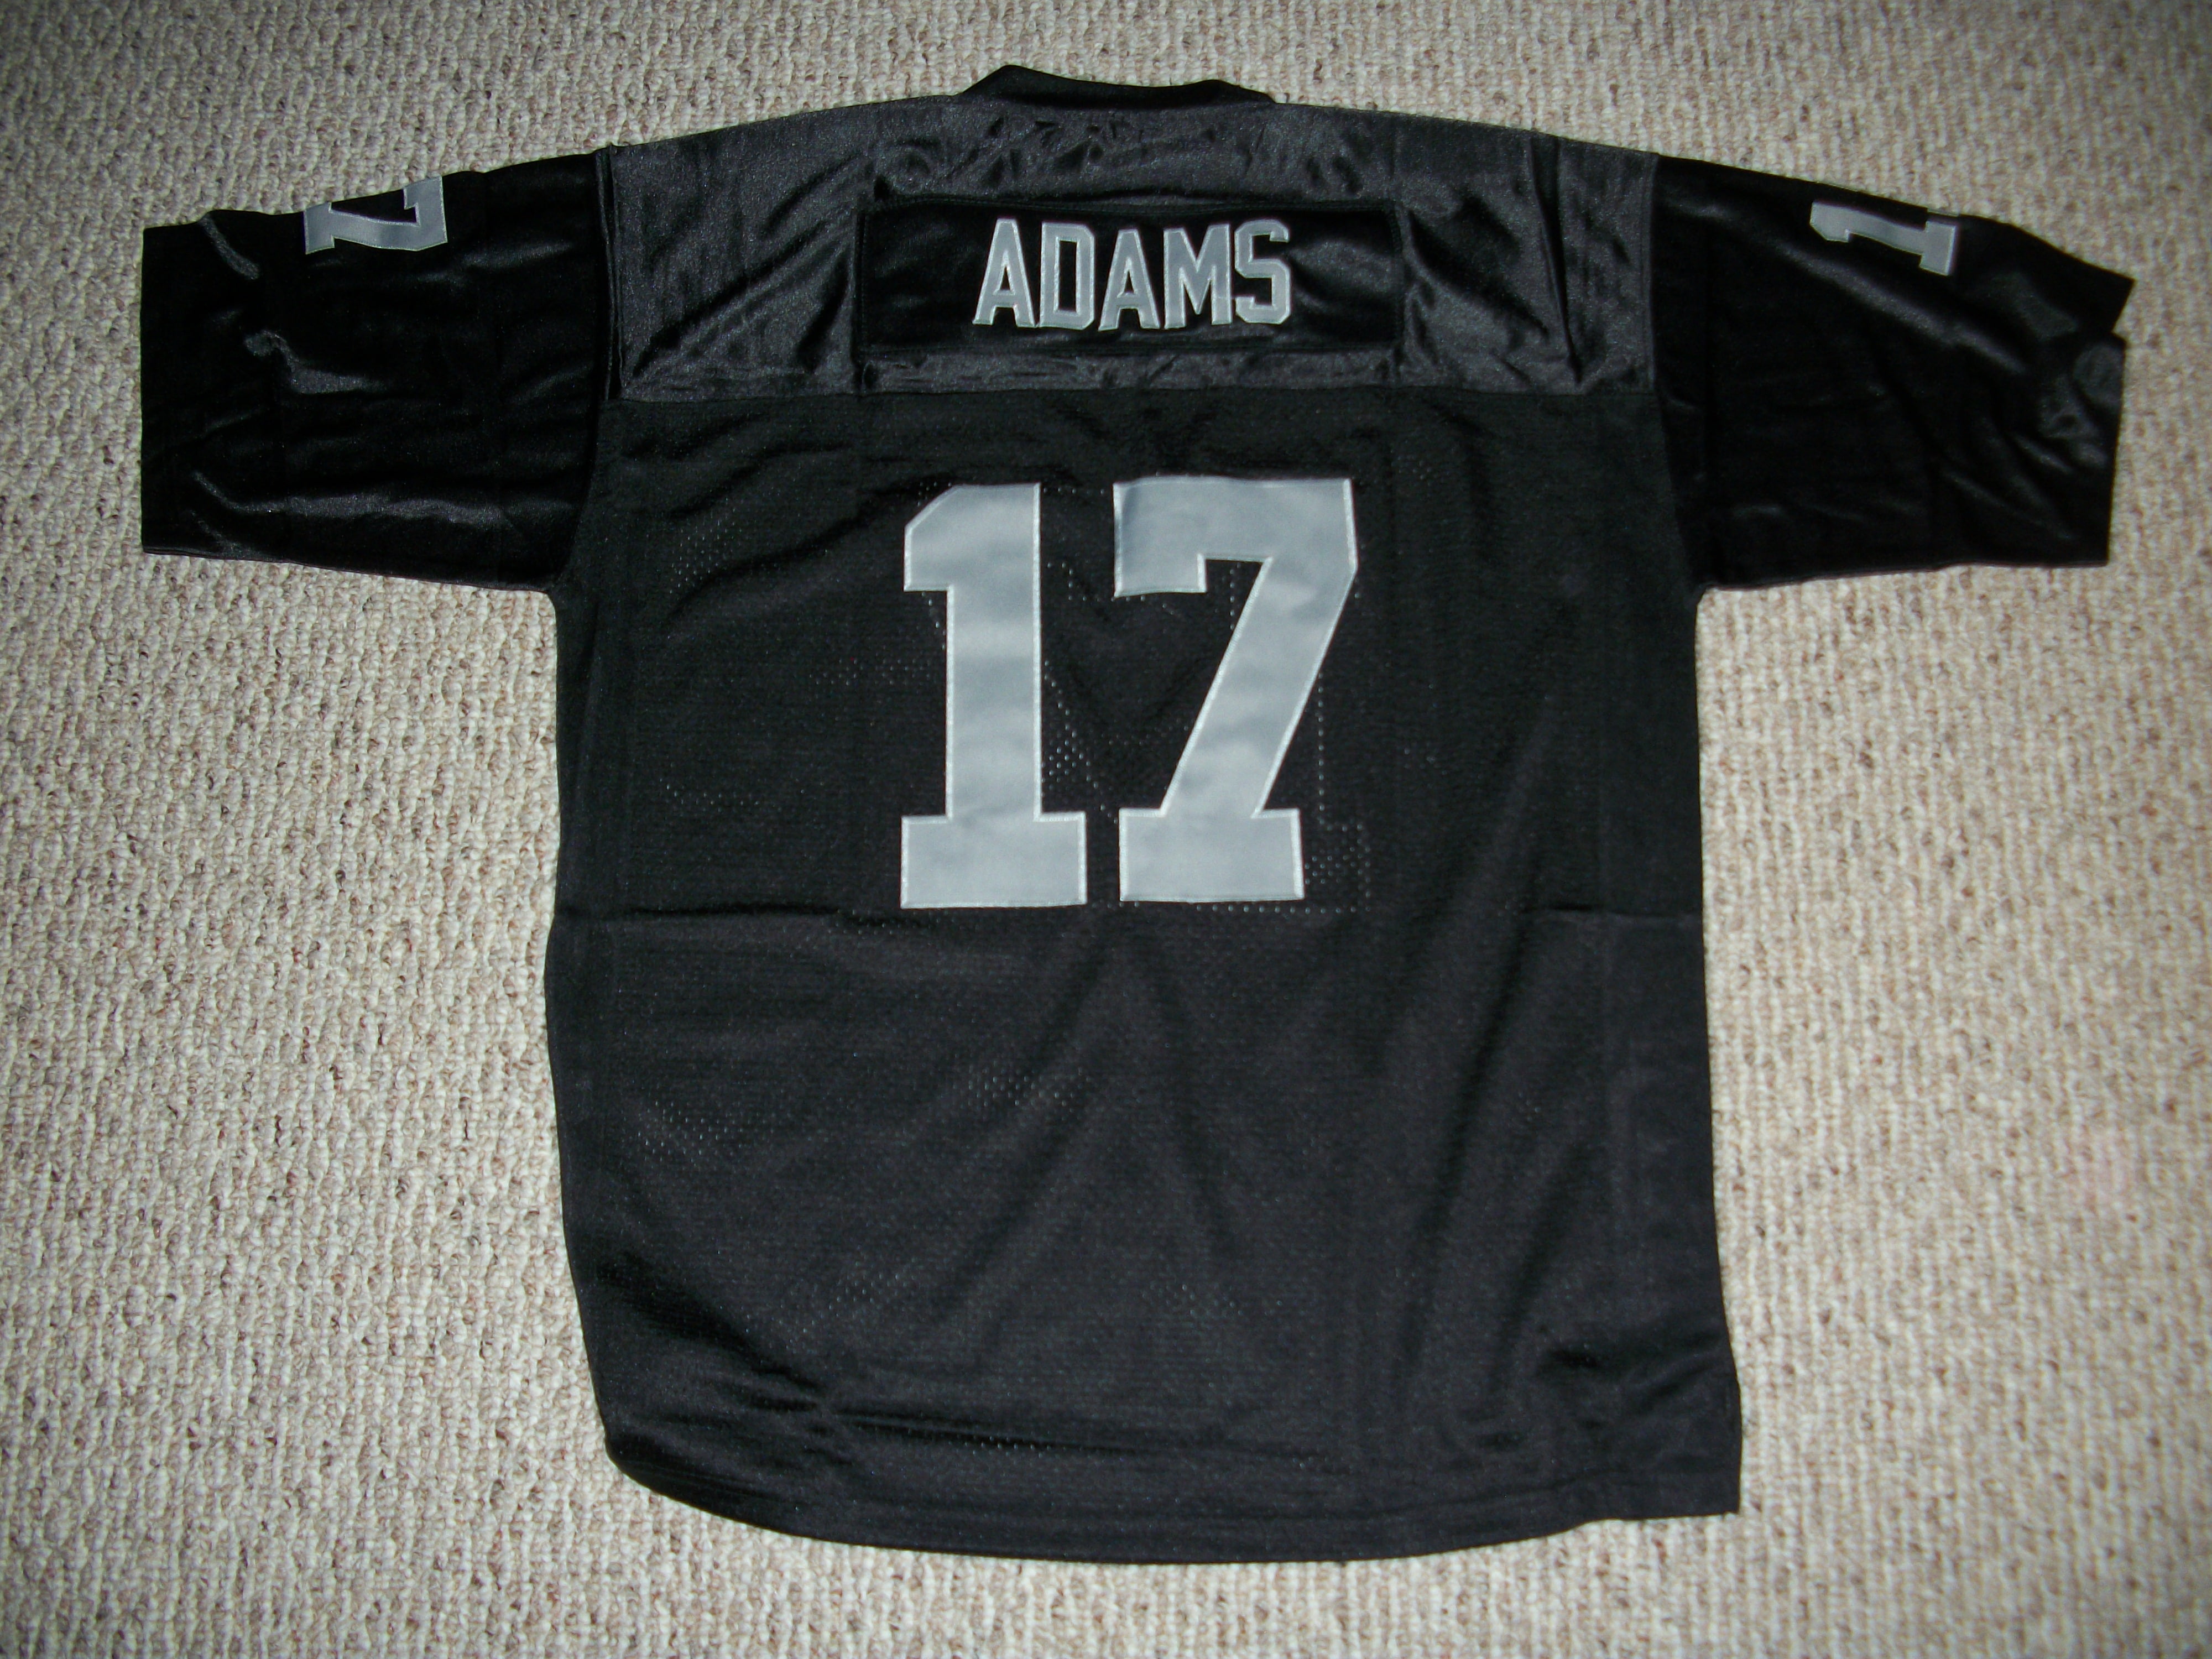 Adams Myles replica jersey